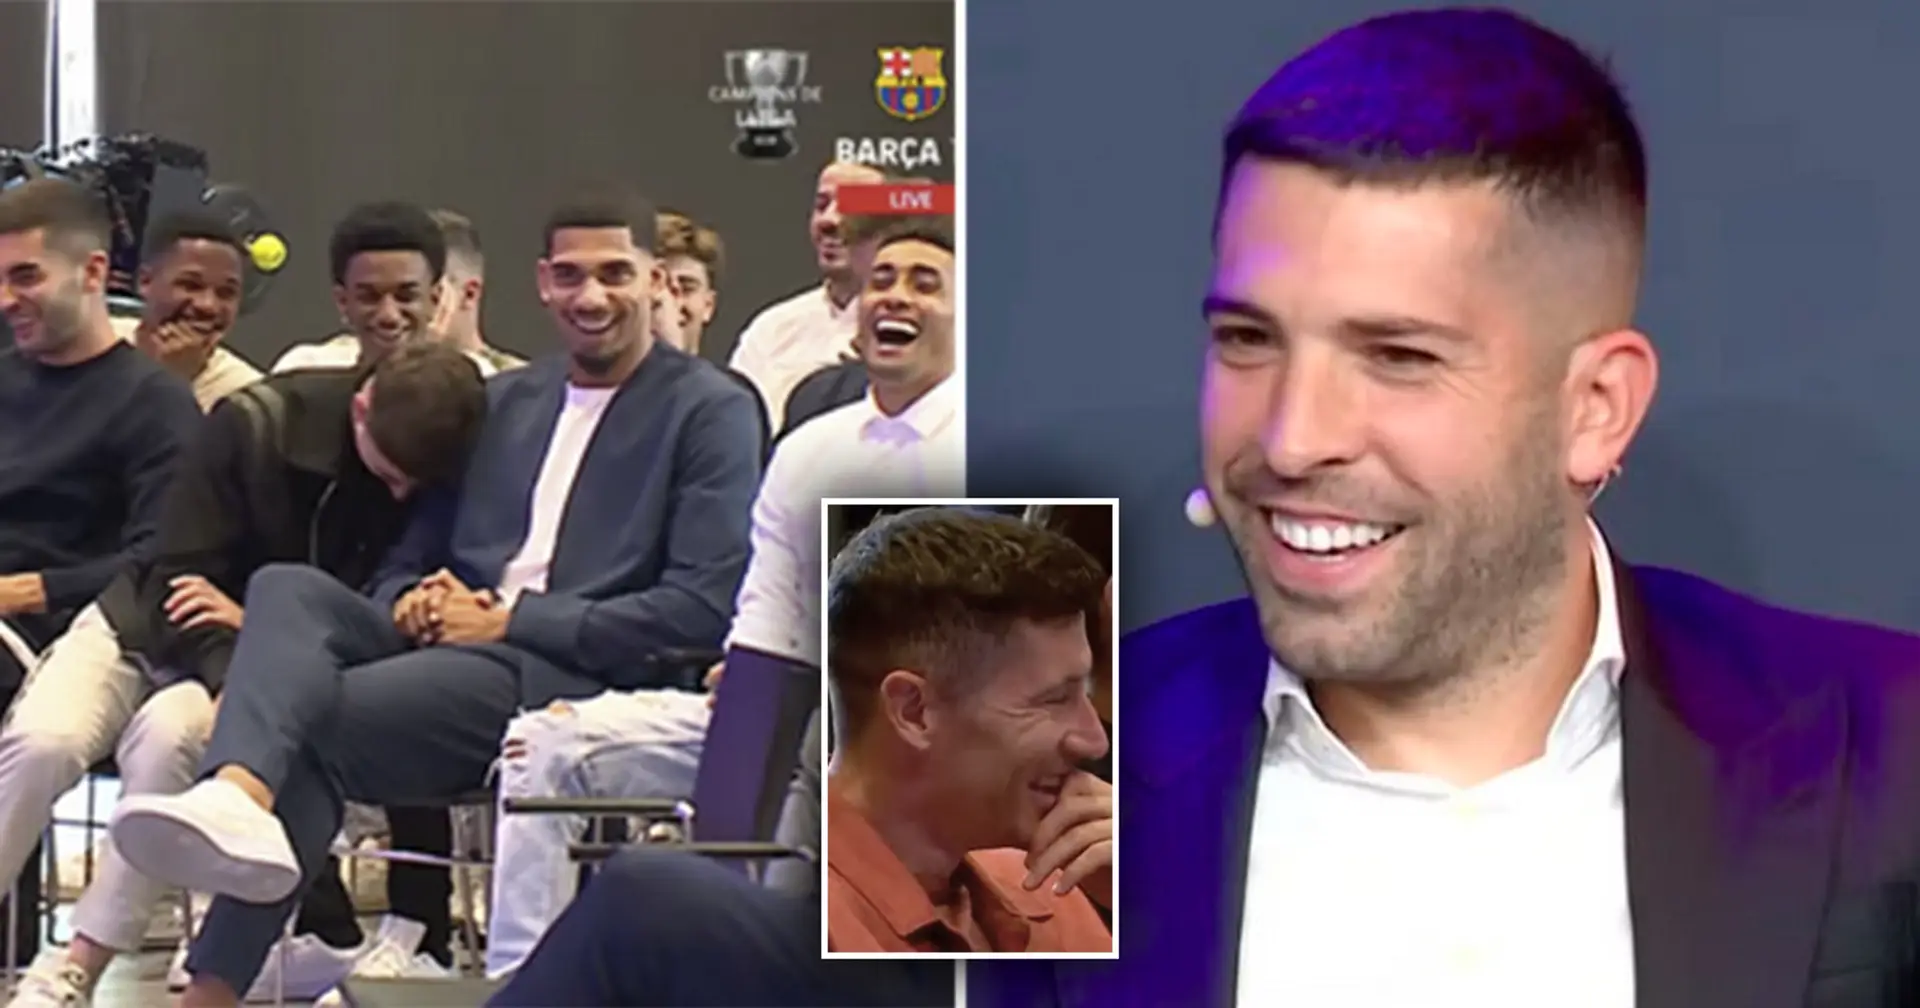 Alba trolls Lewandowski during farewell ceremony, makes players burst into laughter